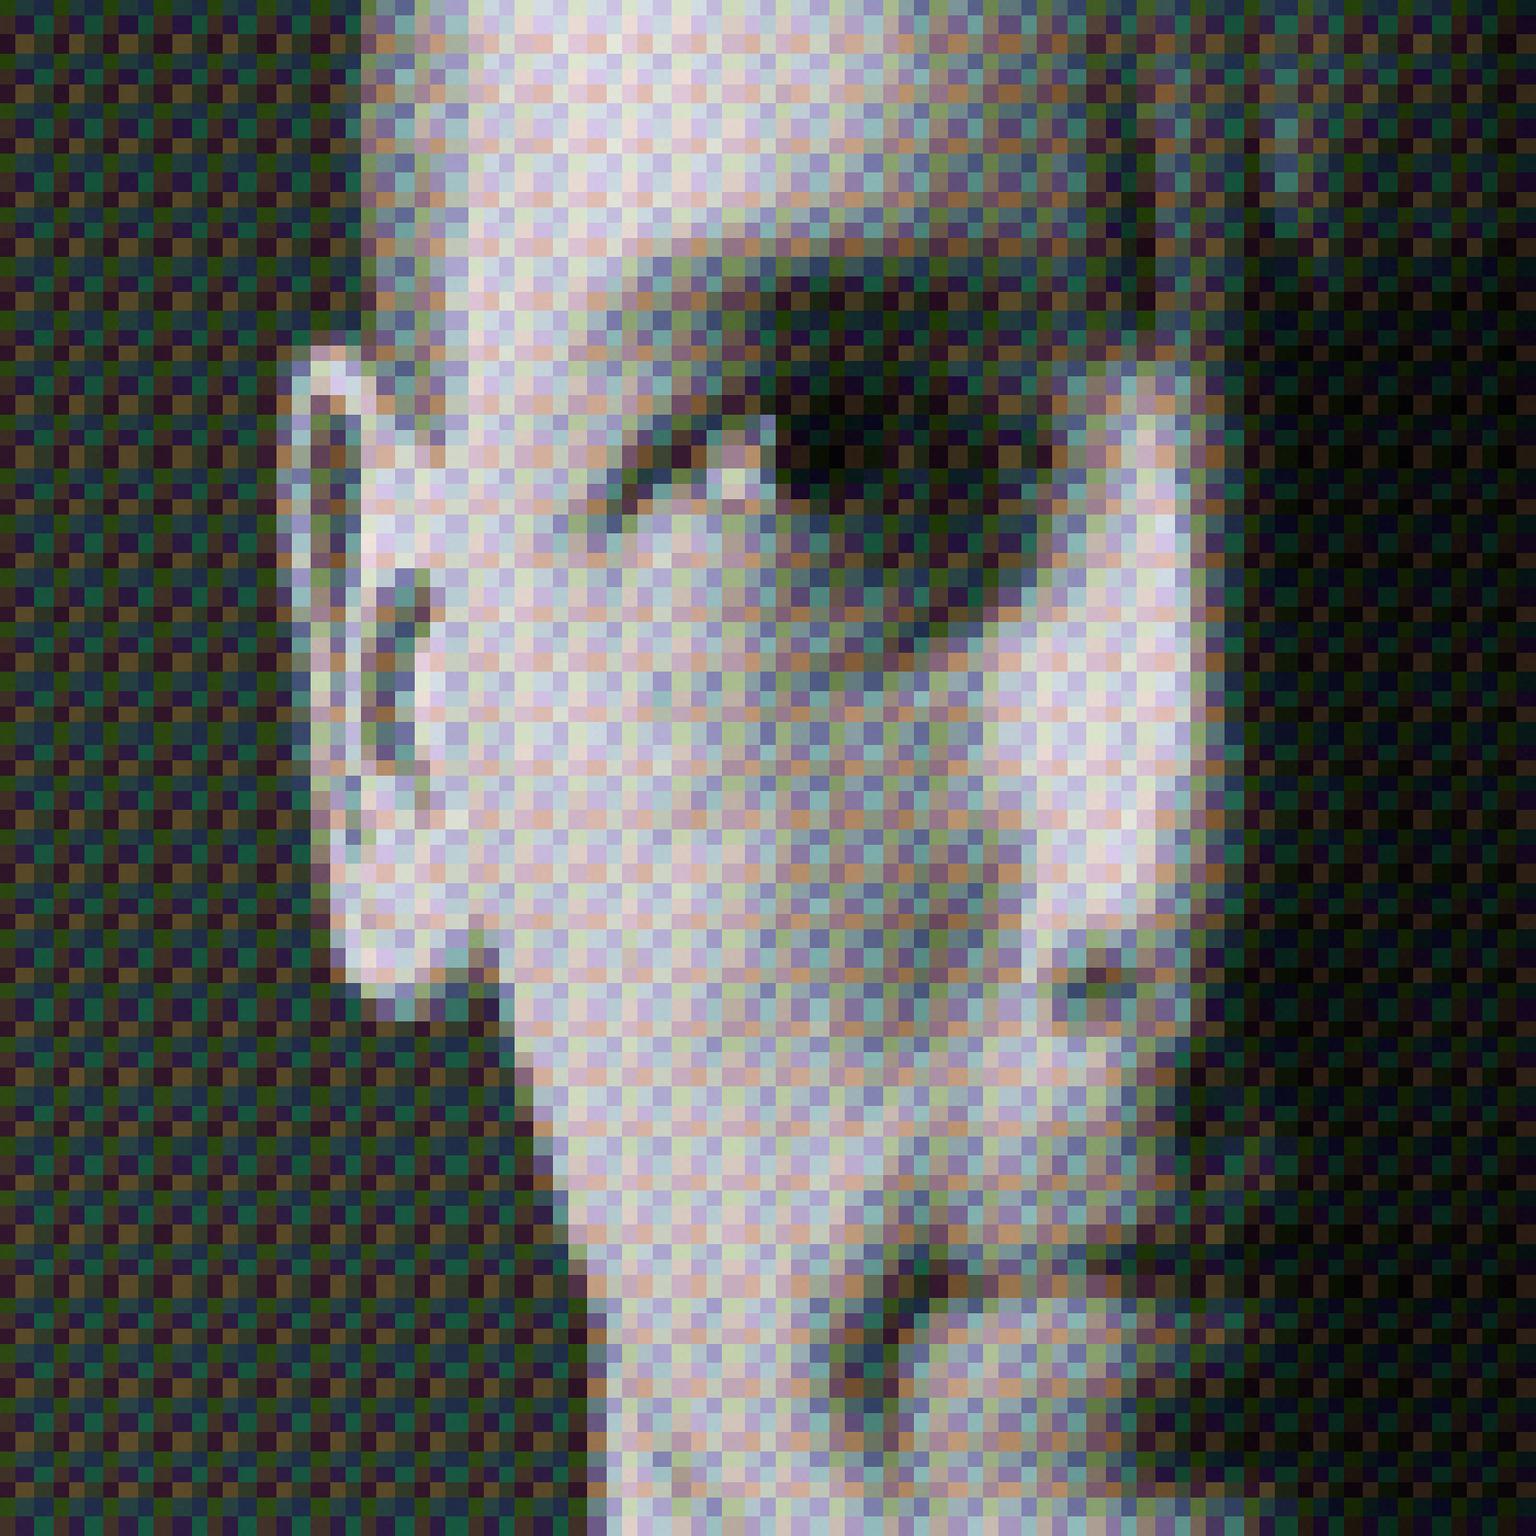 Image for entry 'Portrait of Sándor'